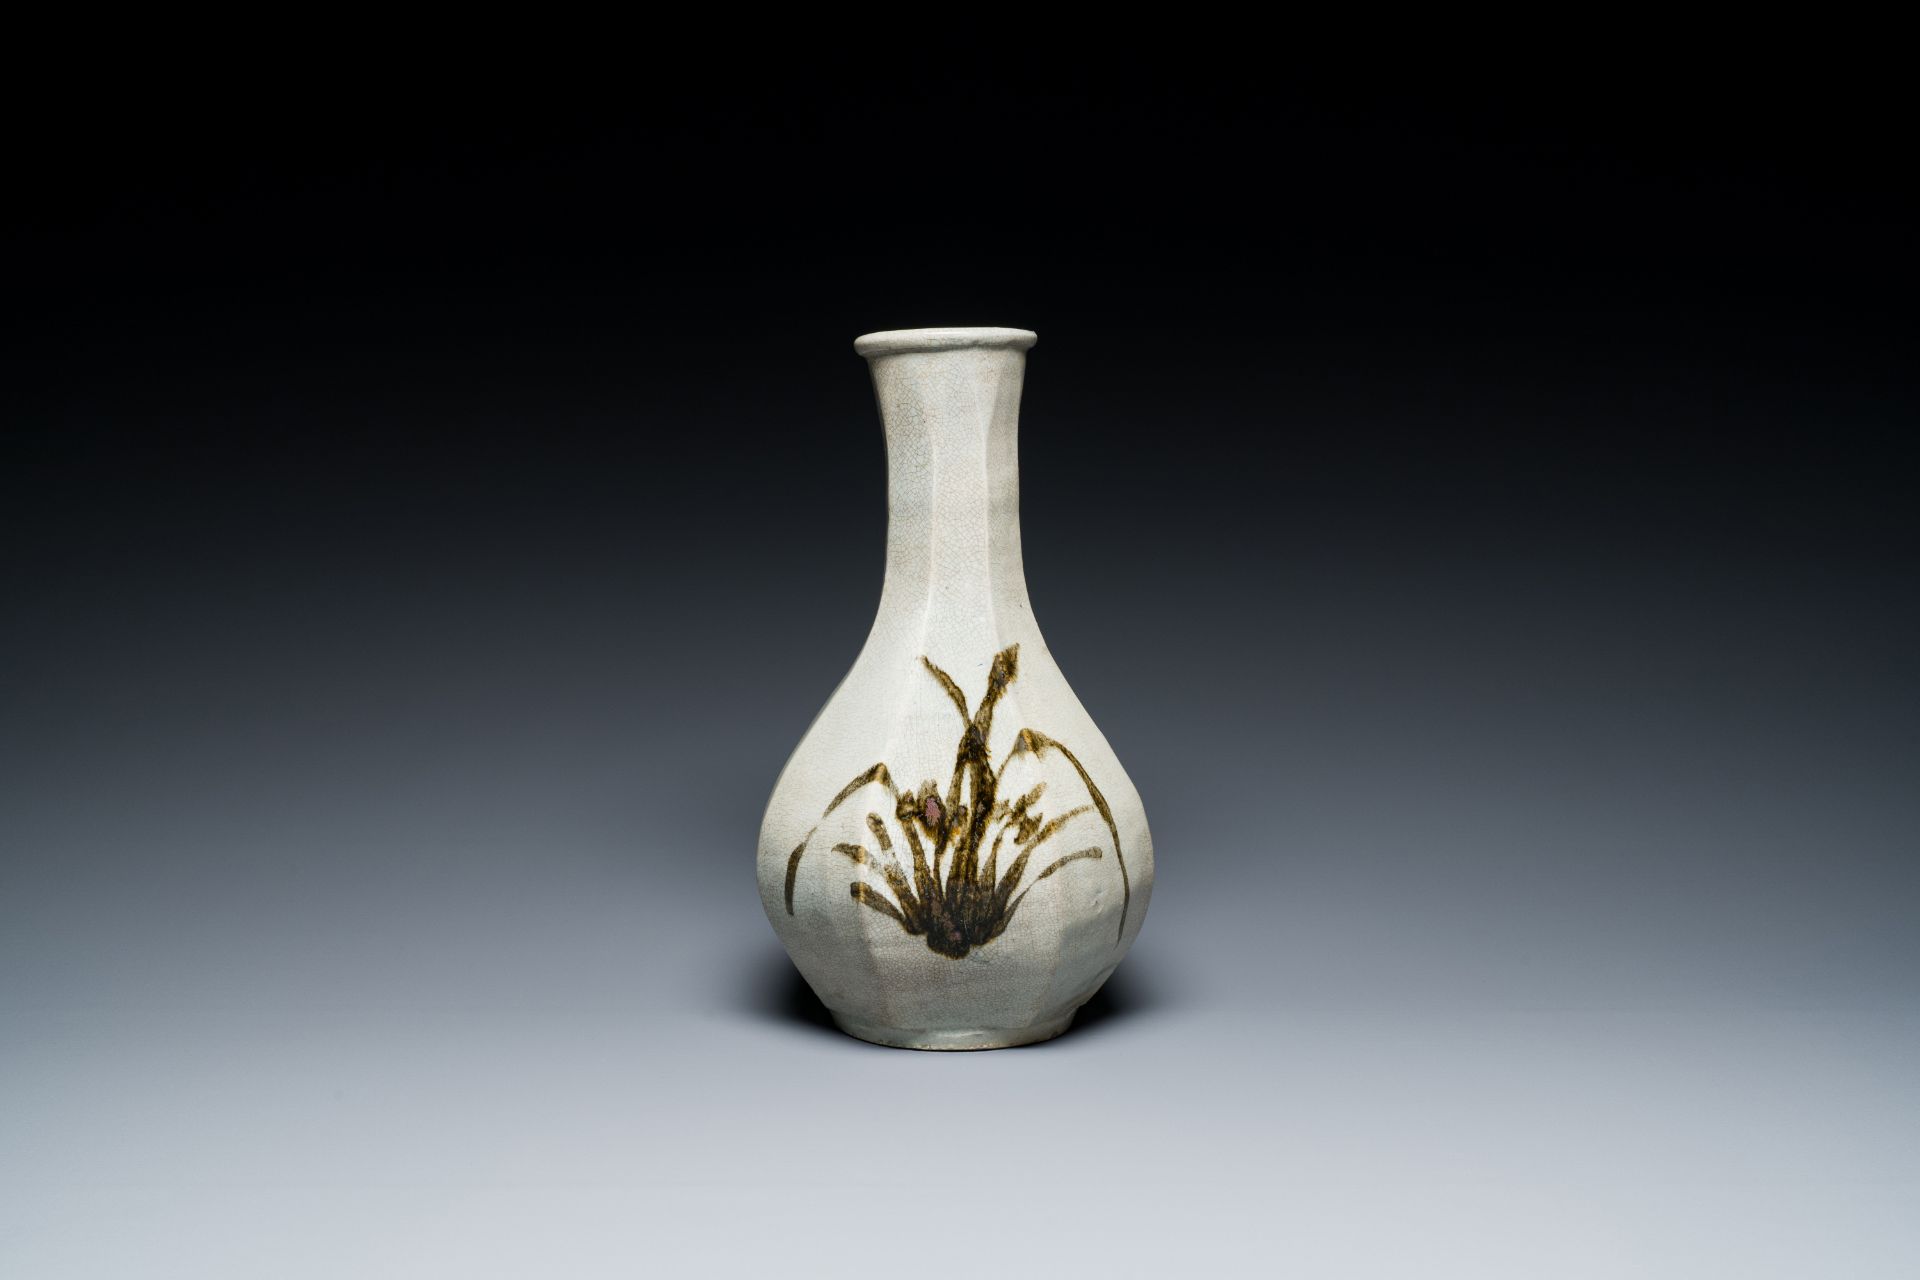 A Korean bottle vase with floral design, Joseon dynasty, 16th C.